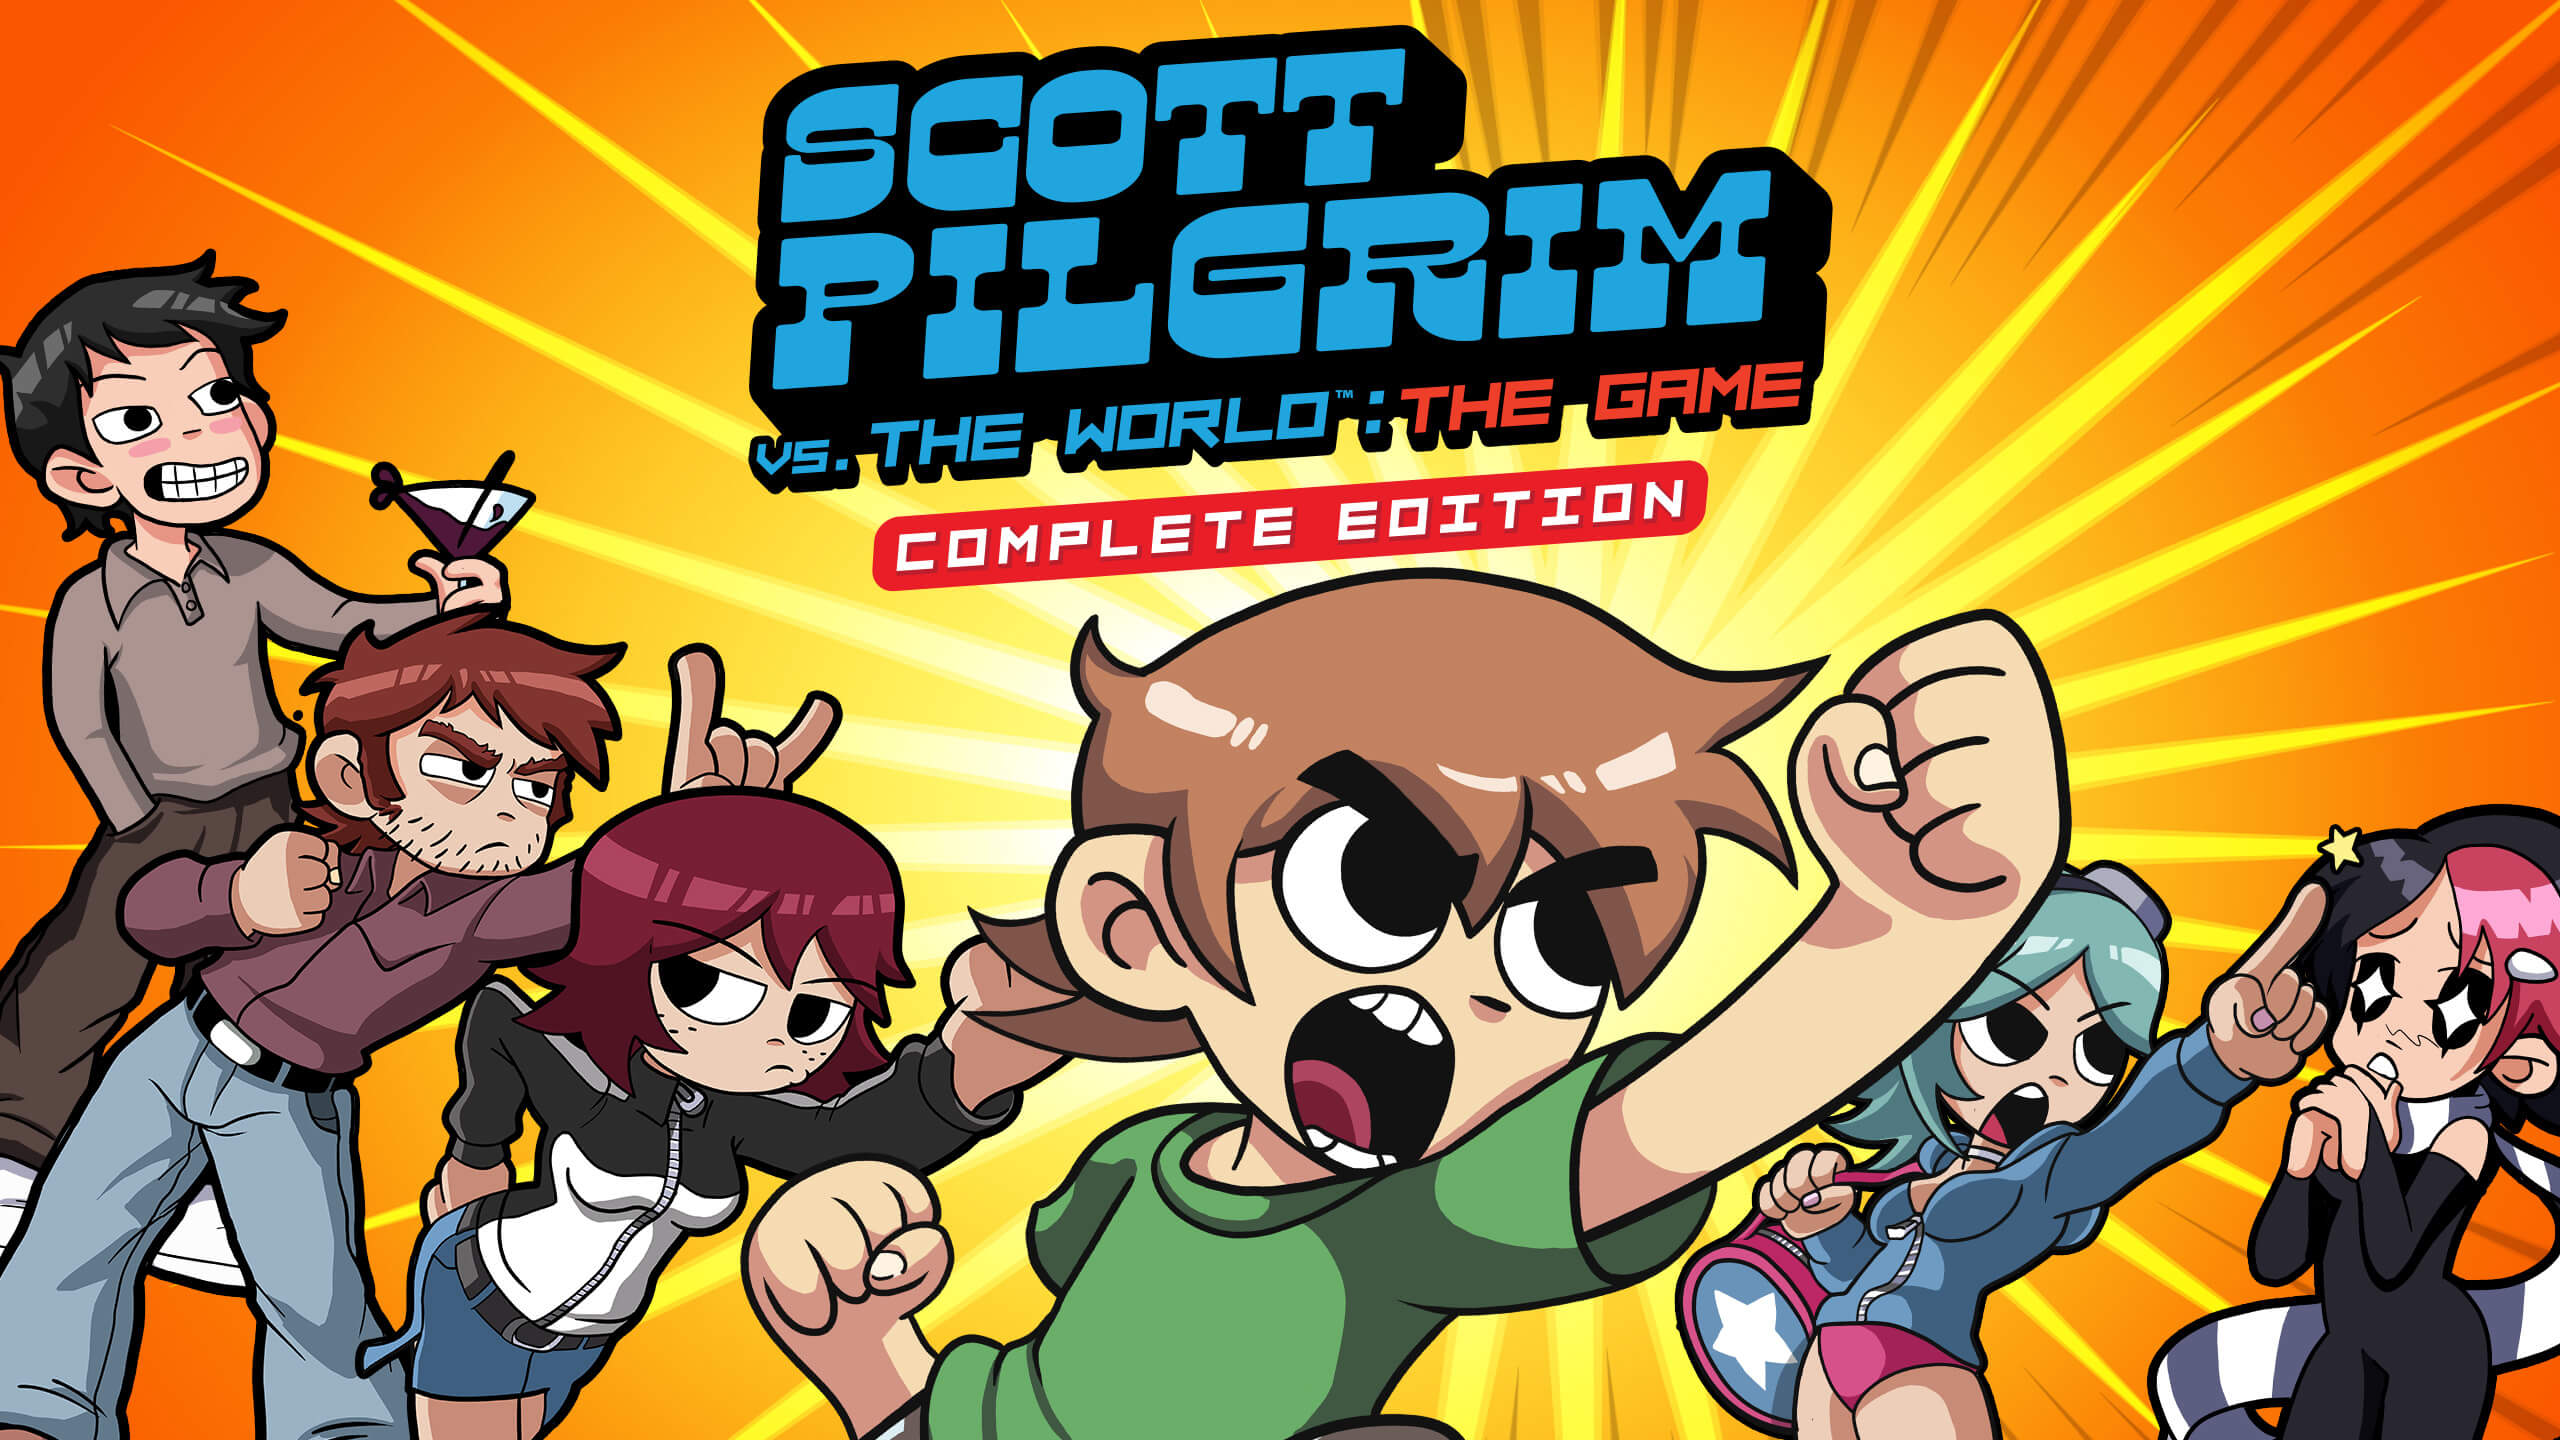 Scott Pilgrim vs. The World: The Game  Complete Edition (RUS)  